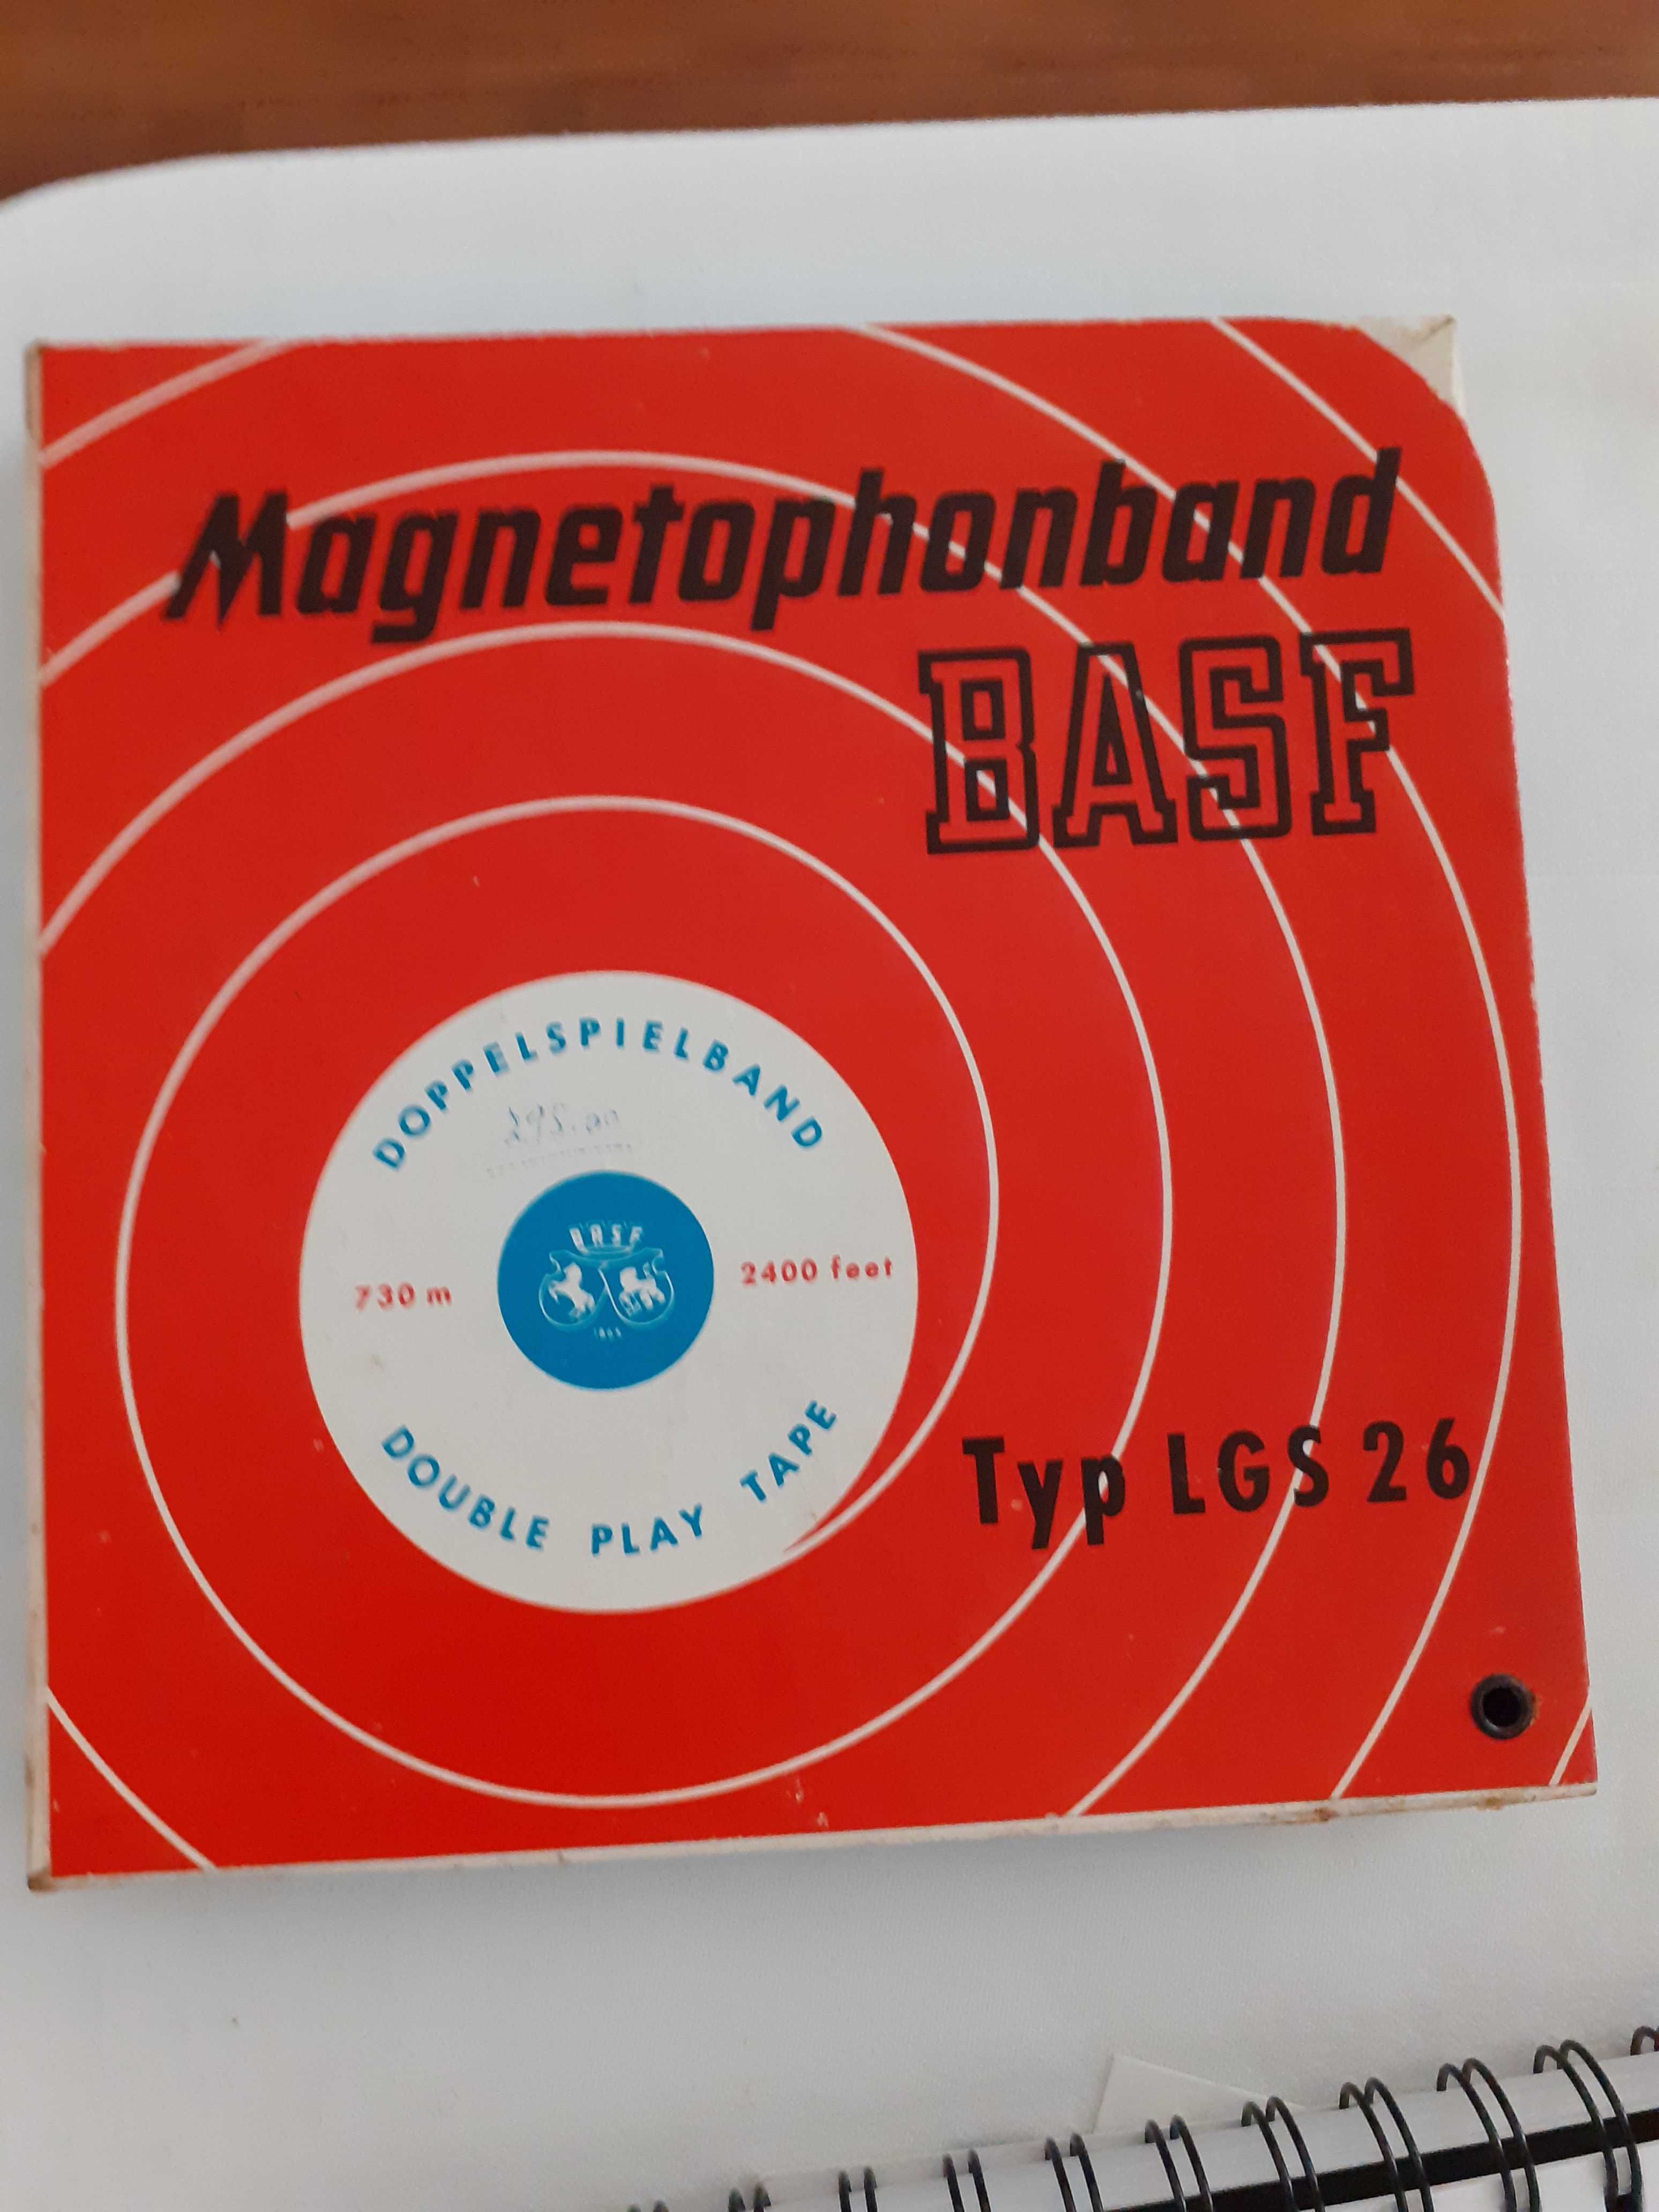 magnetophone band basf Typ lgs 26